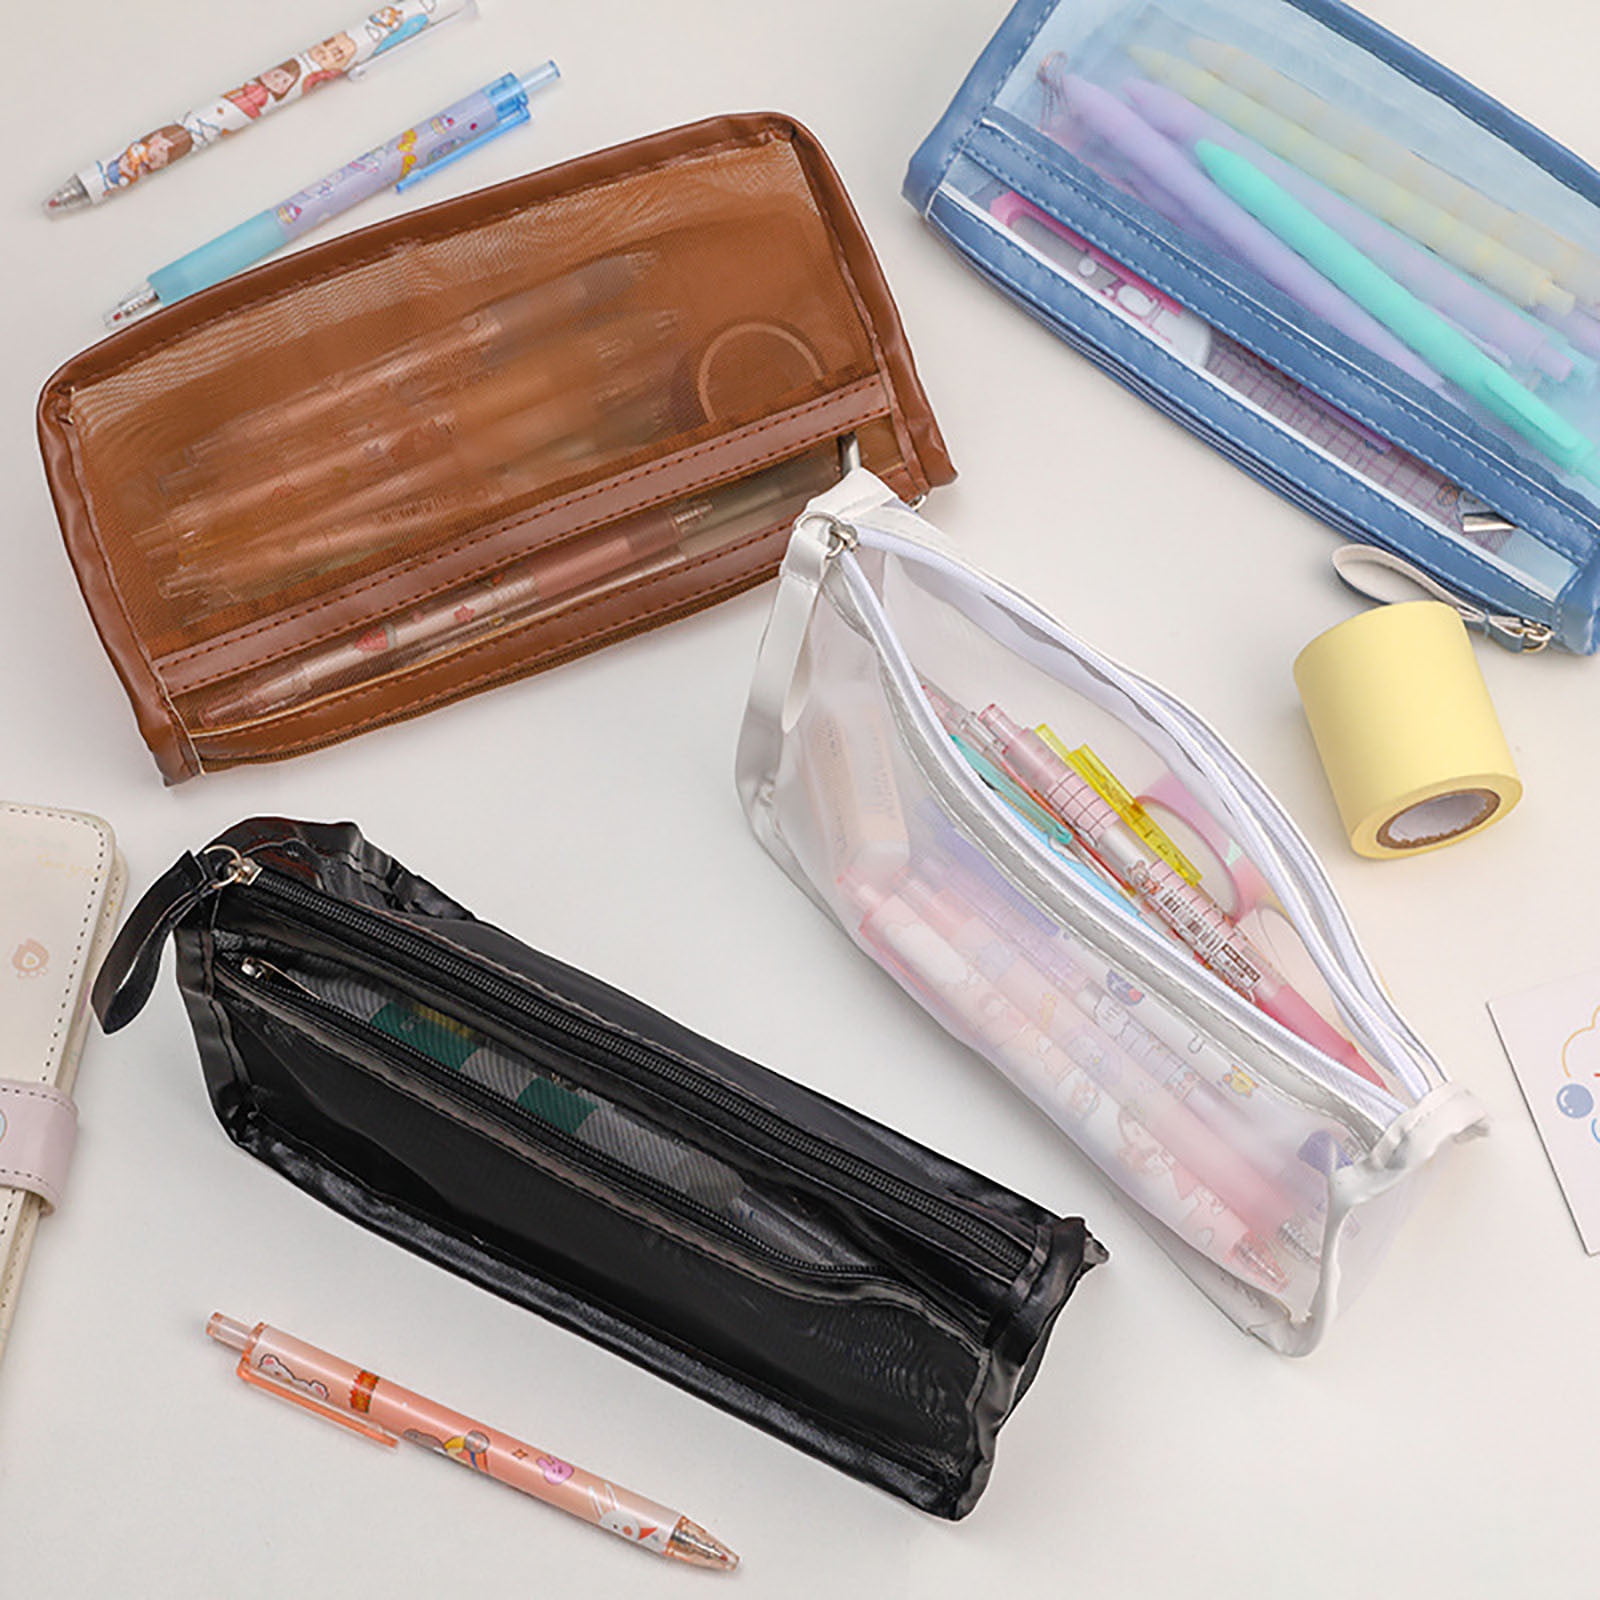 Pro Art Mesh & Vinyl Zipper Bag 10x13, Mesh Zipper Pouch Bags, Travel  Pouch, Mesh Pouches for Organization, Board Game Storage Bags, Mesh Pencil